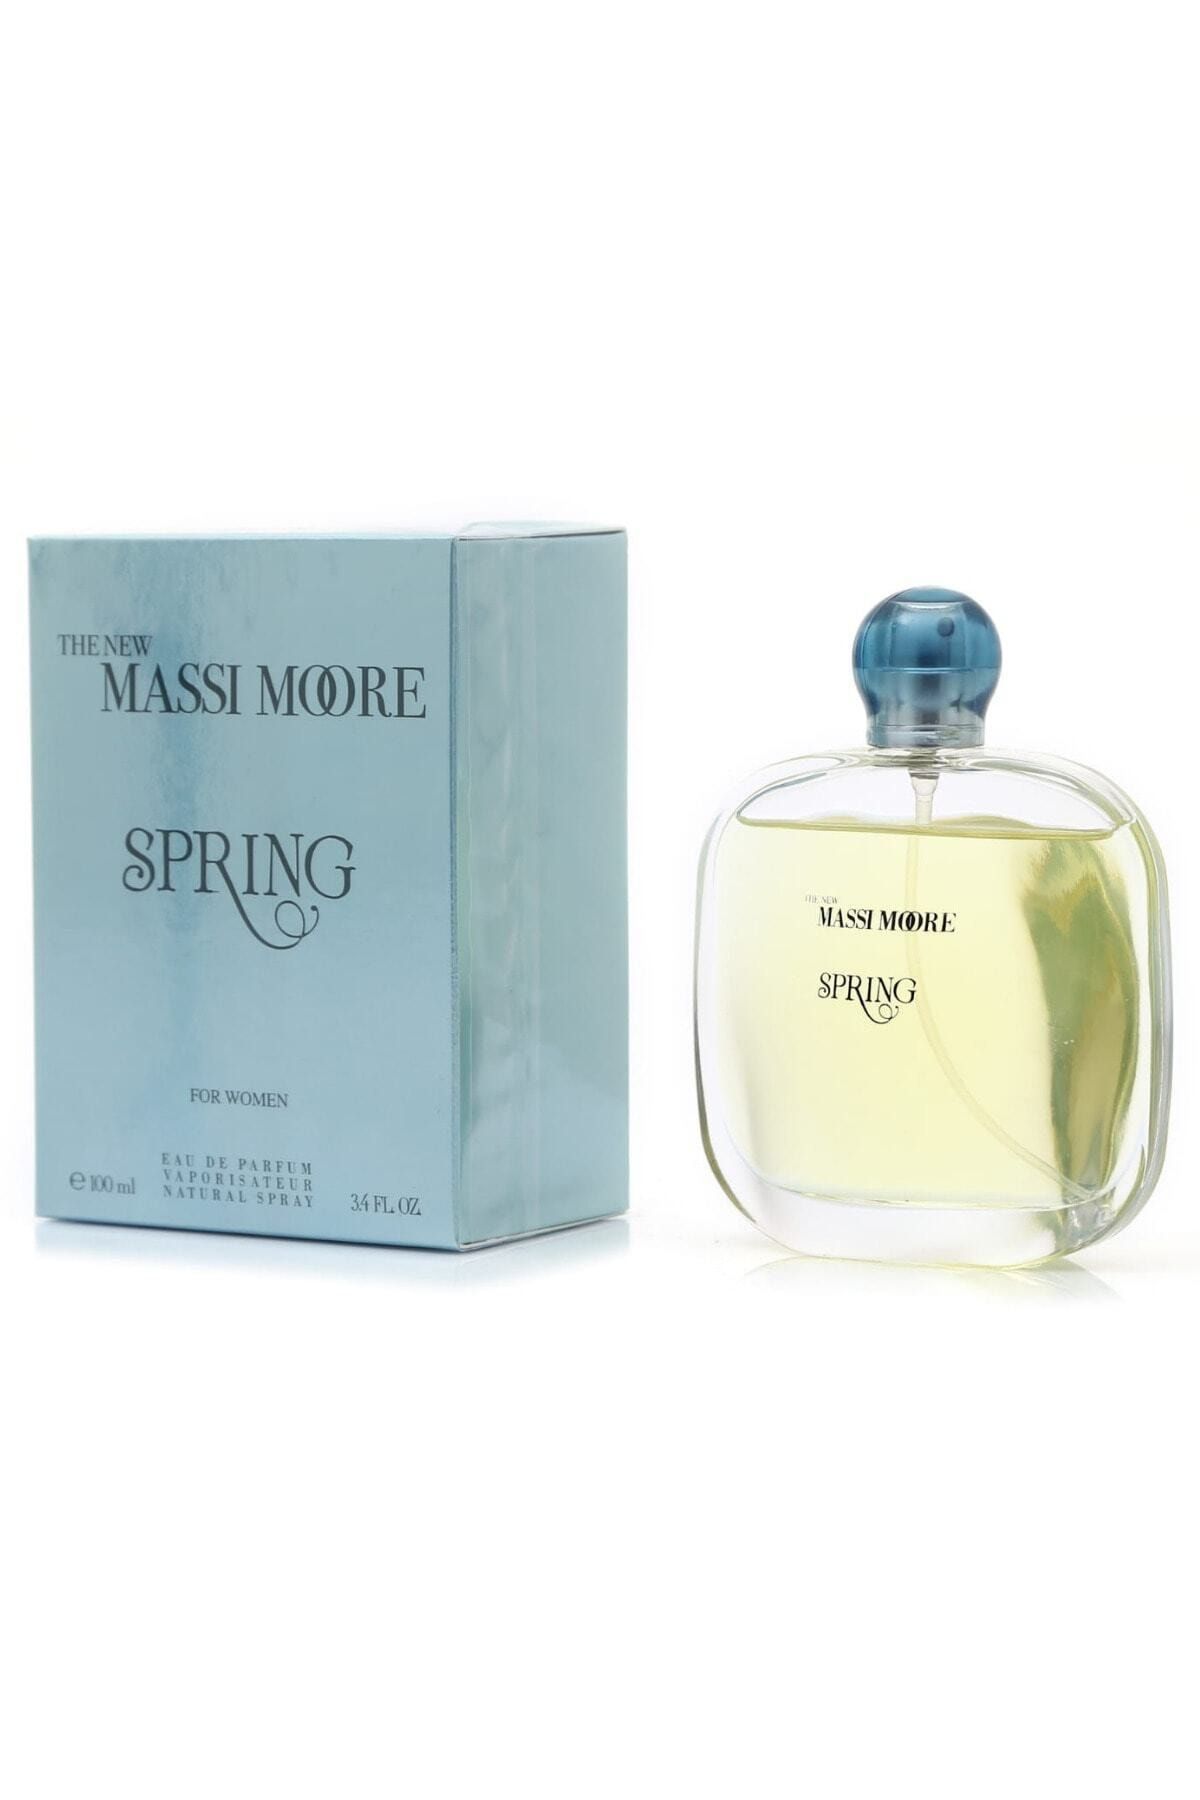 MASSİ The New Moore Sprıng Woman Parfume 100ml Hzlsprn100mwprf